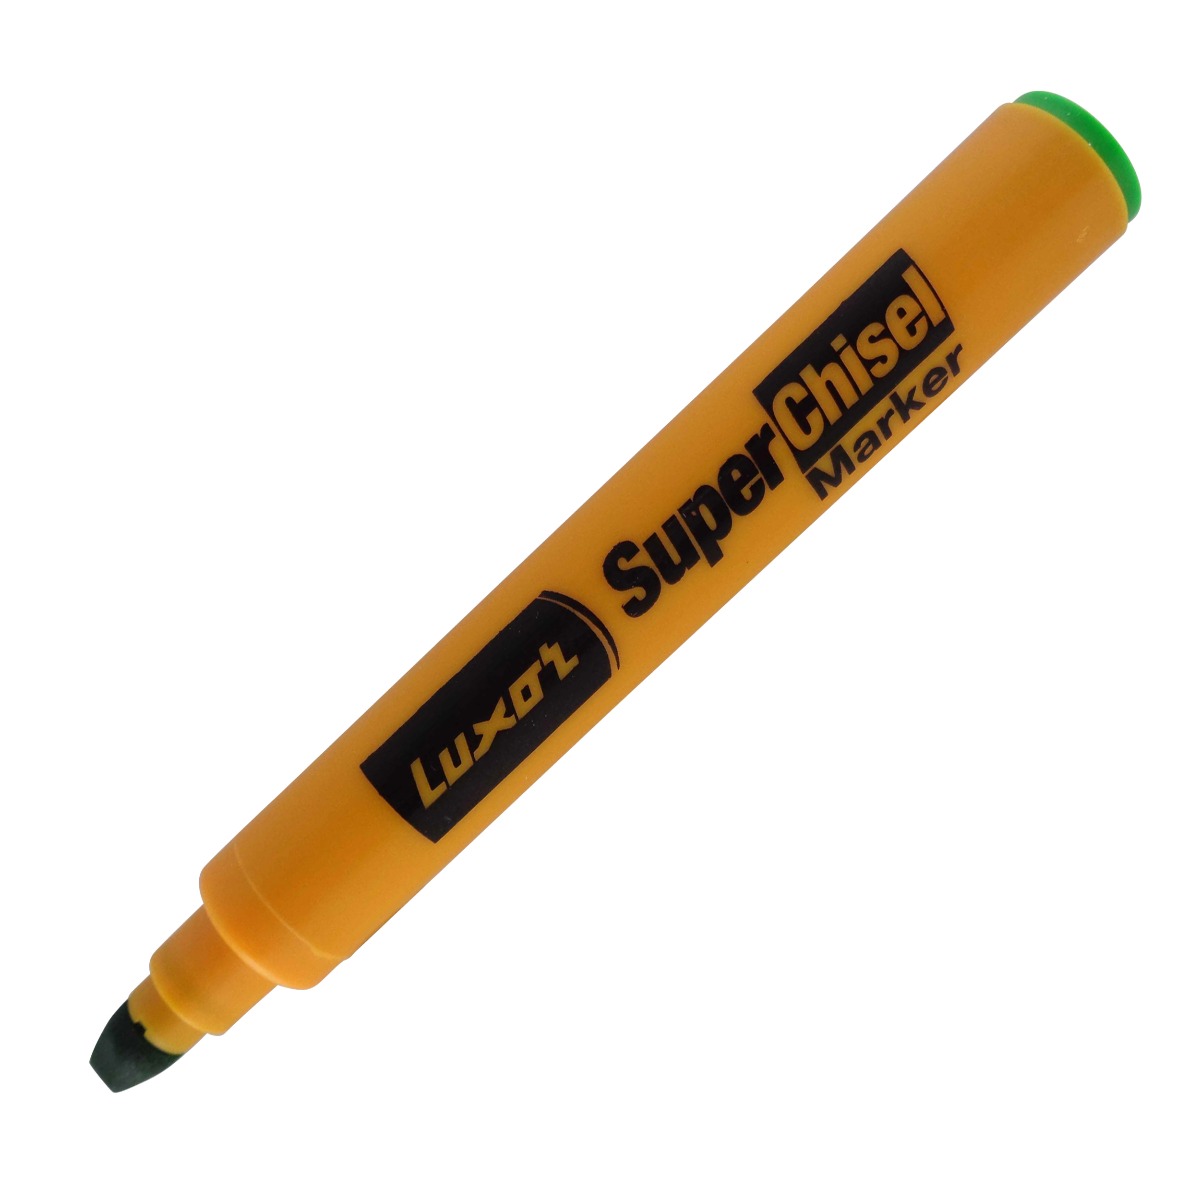 Luxor Model: 15093 Super chisel Yellow color body with Light Green color cap with Light Green ink marker